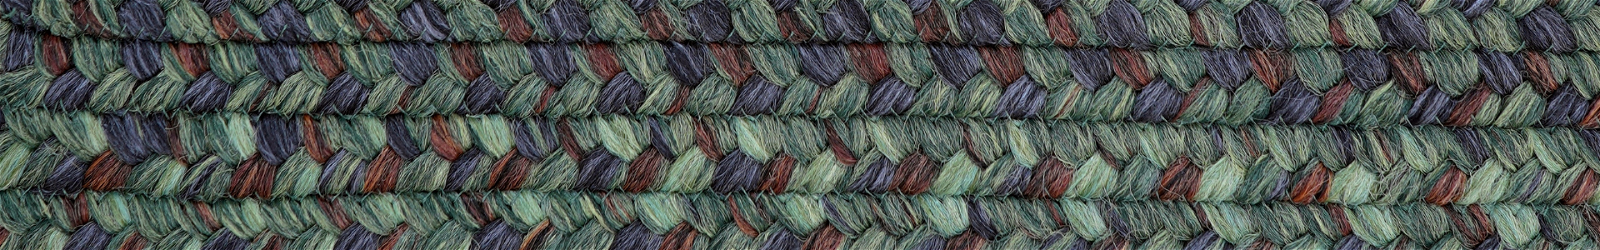 10 x 10 - Green Braided Rugs